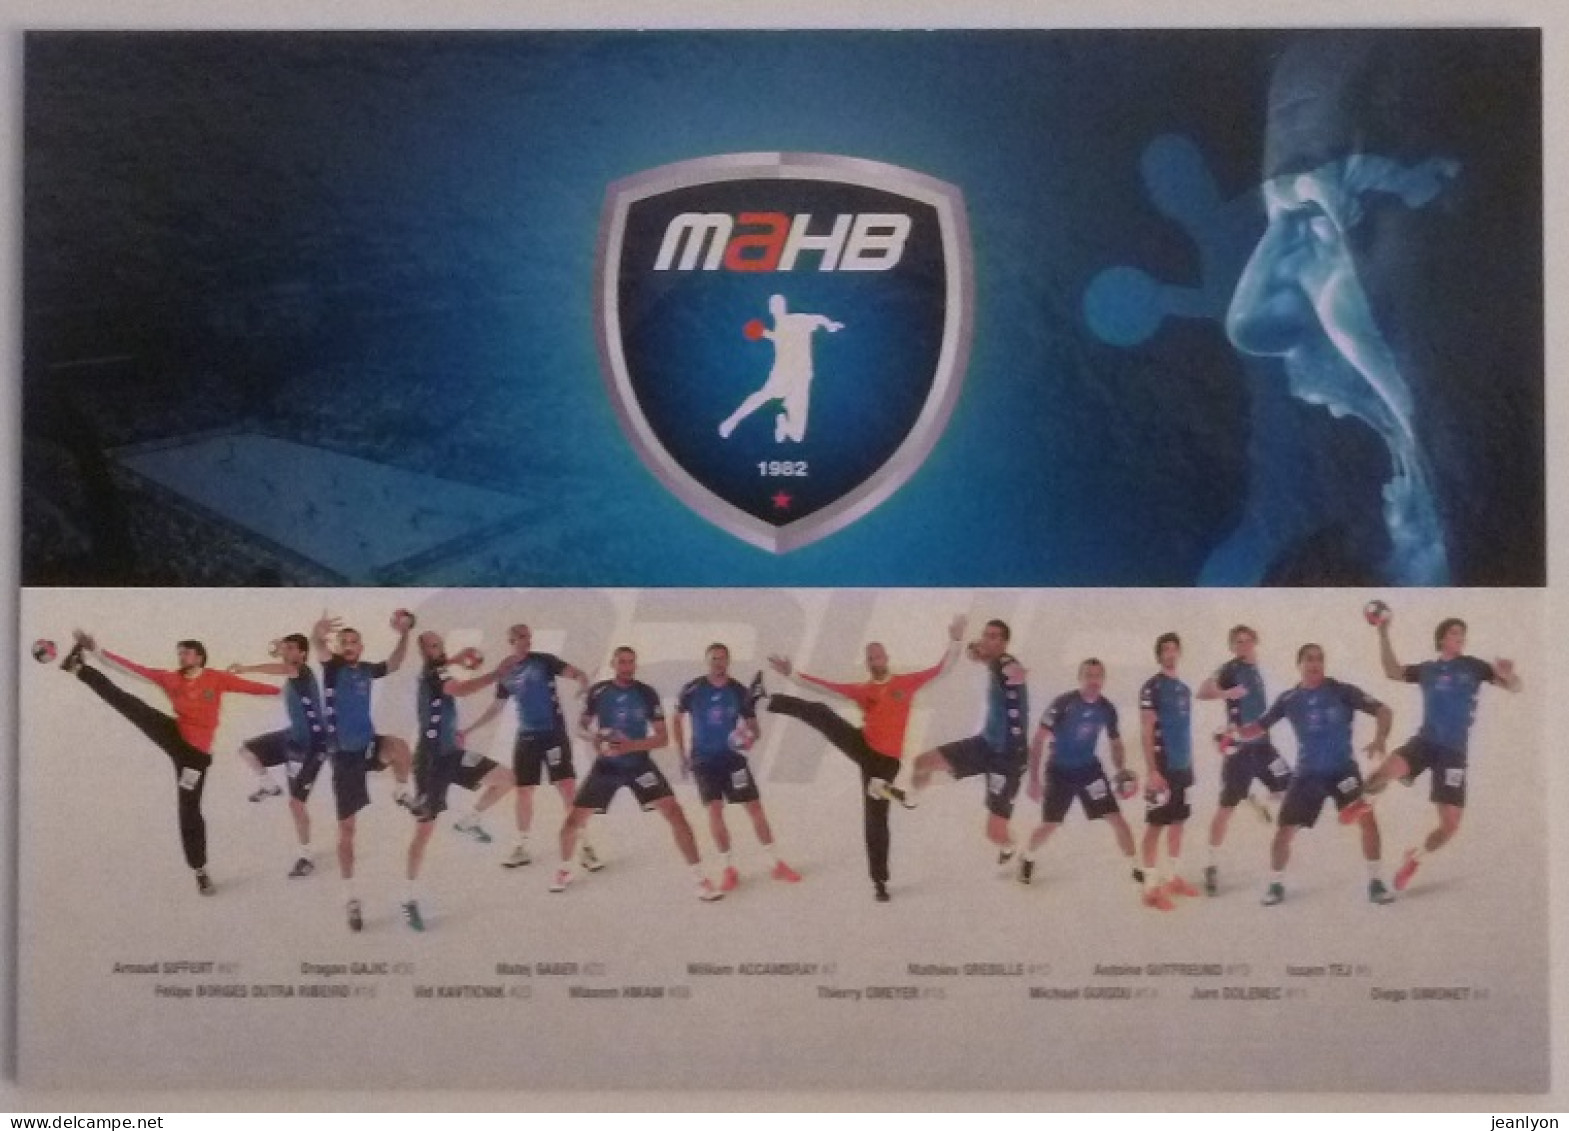 HANDBALL - MAHB Montpellier - Equipe 2014 / Palais Des Sports En Fond , à Coté Du Blason - Carte Publicitaire - Handball